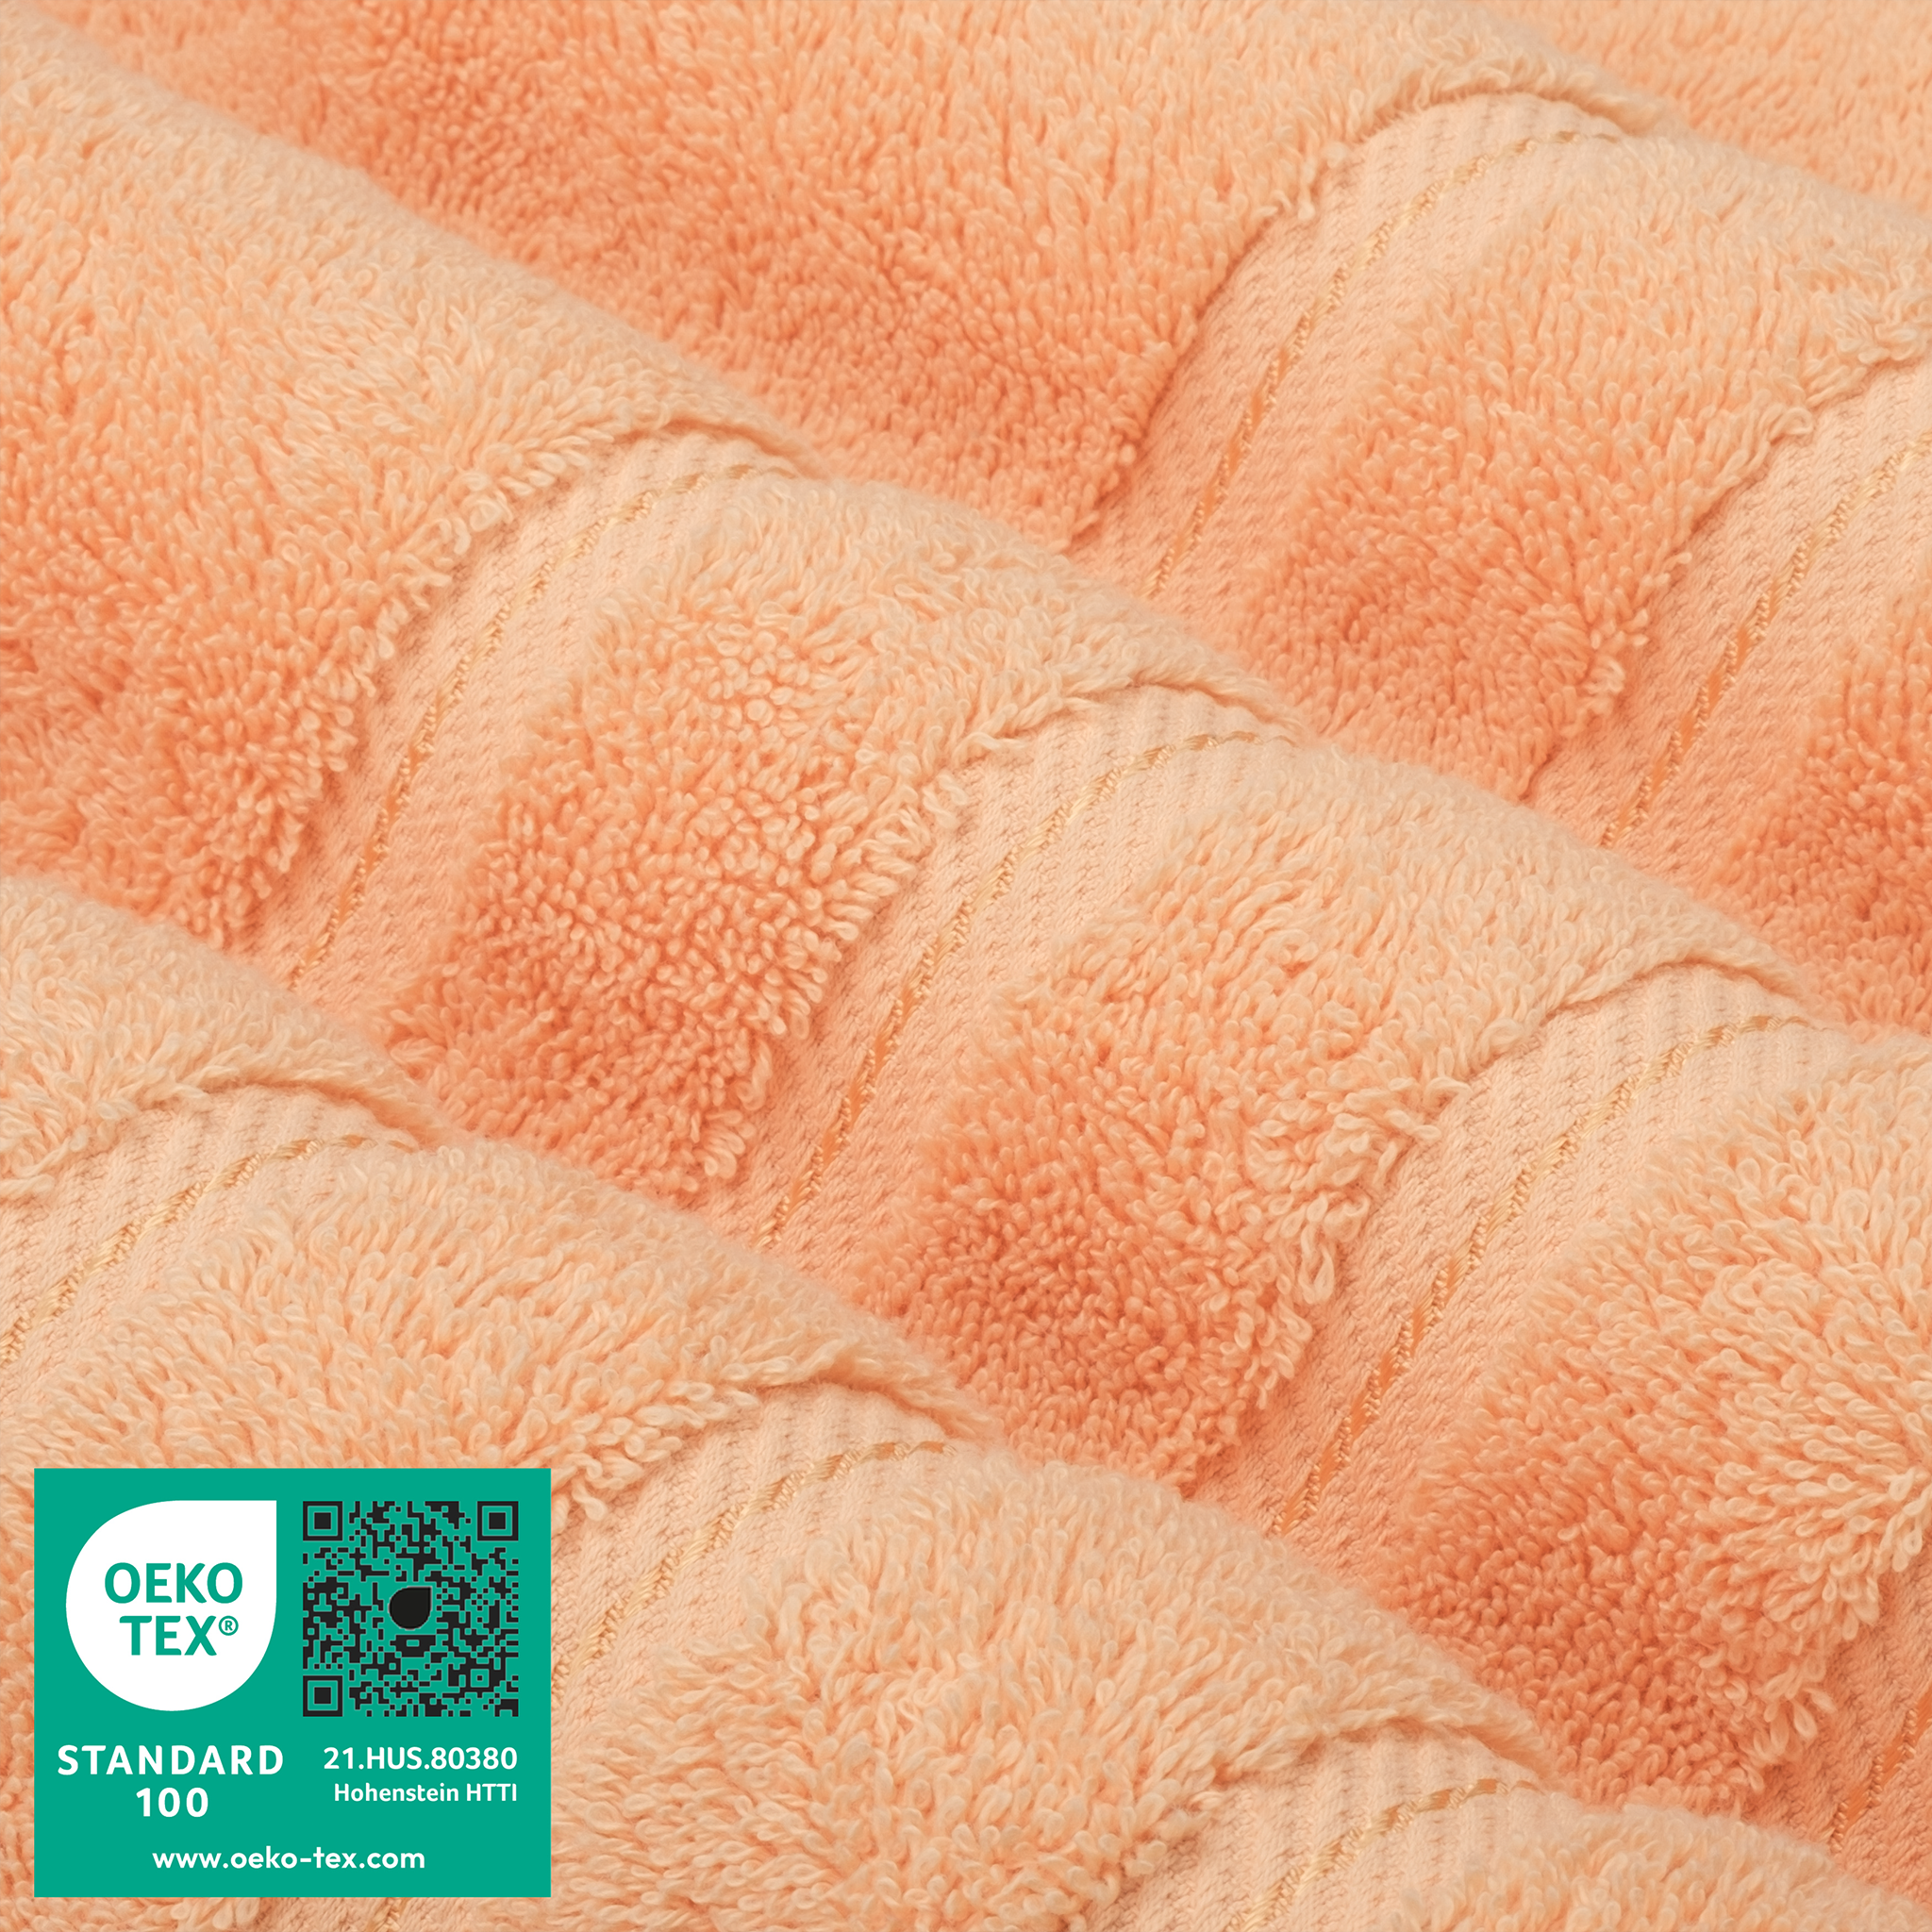 American Soft Linen - 35x70 Jumbo Bath Sheet Turkish Bath Towel - 16 Piece Case Pack - Malibu-Peach - 2